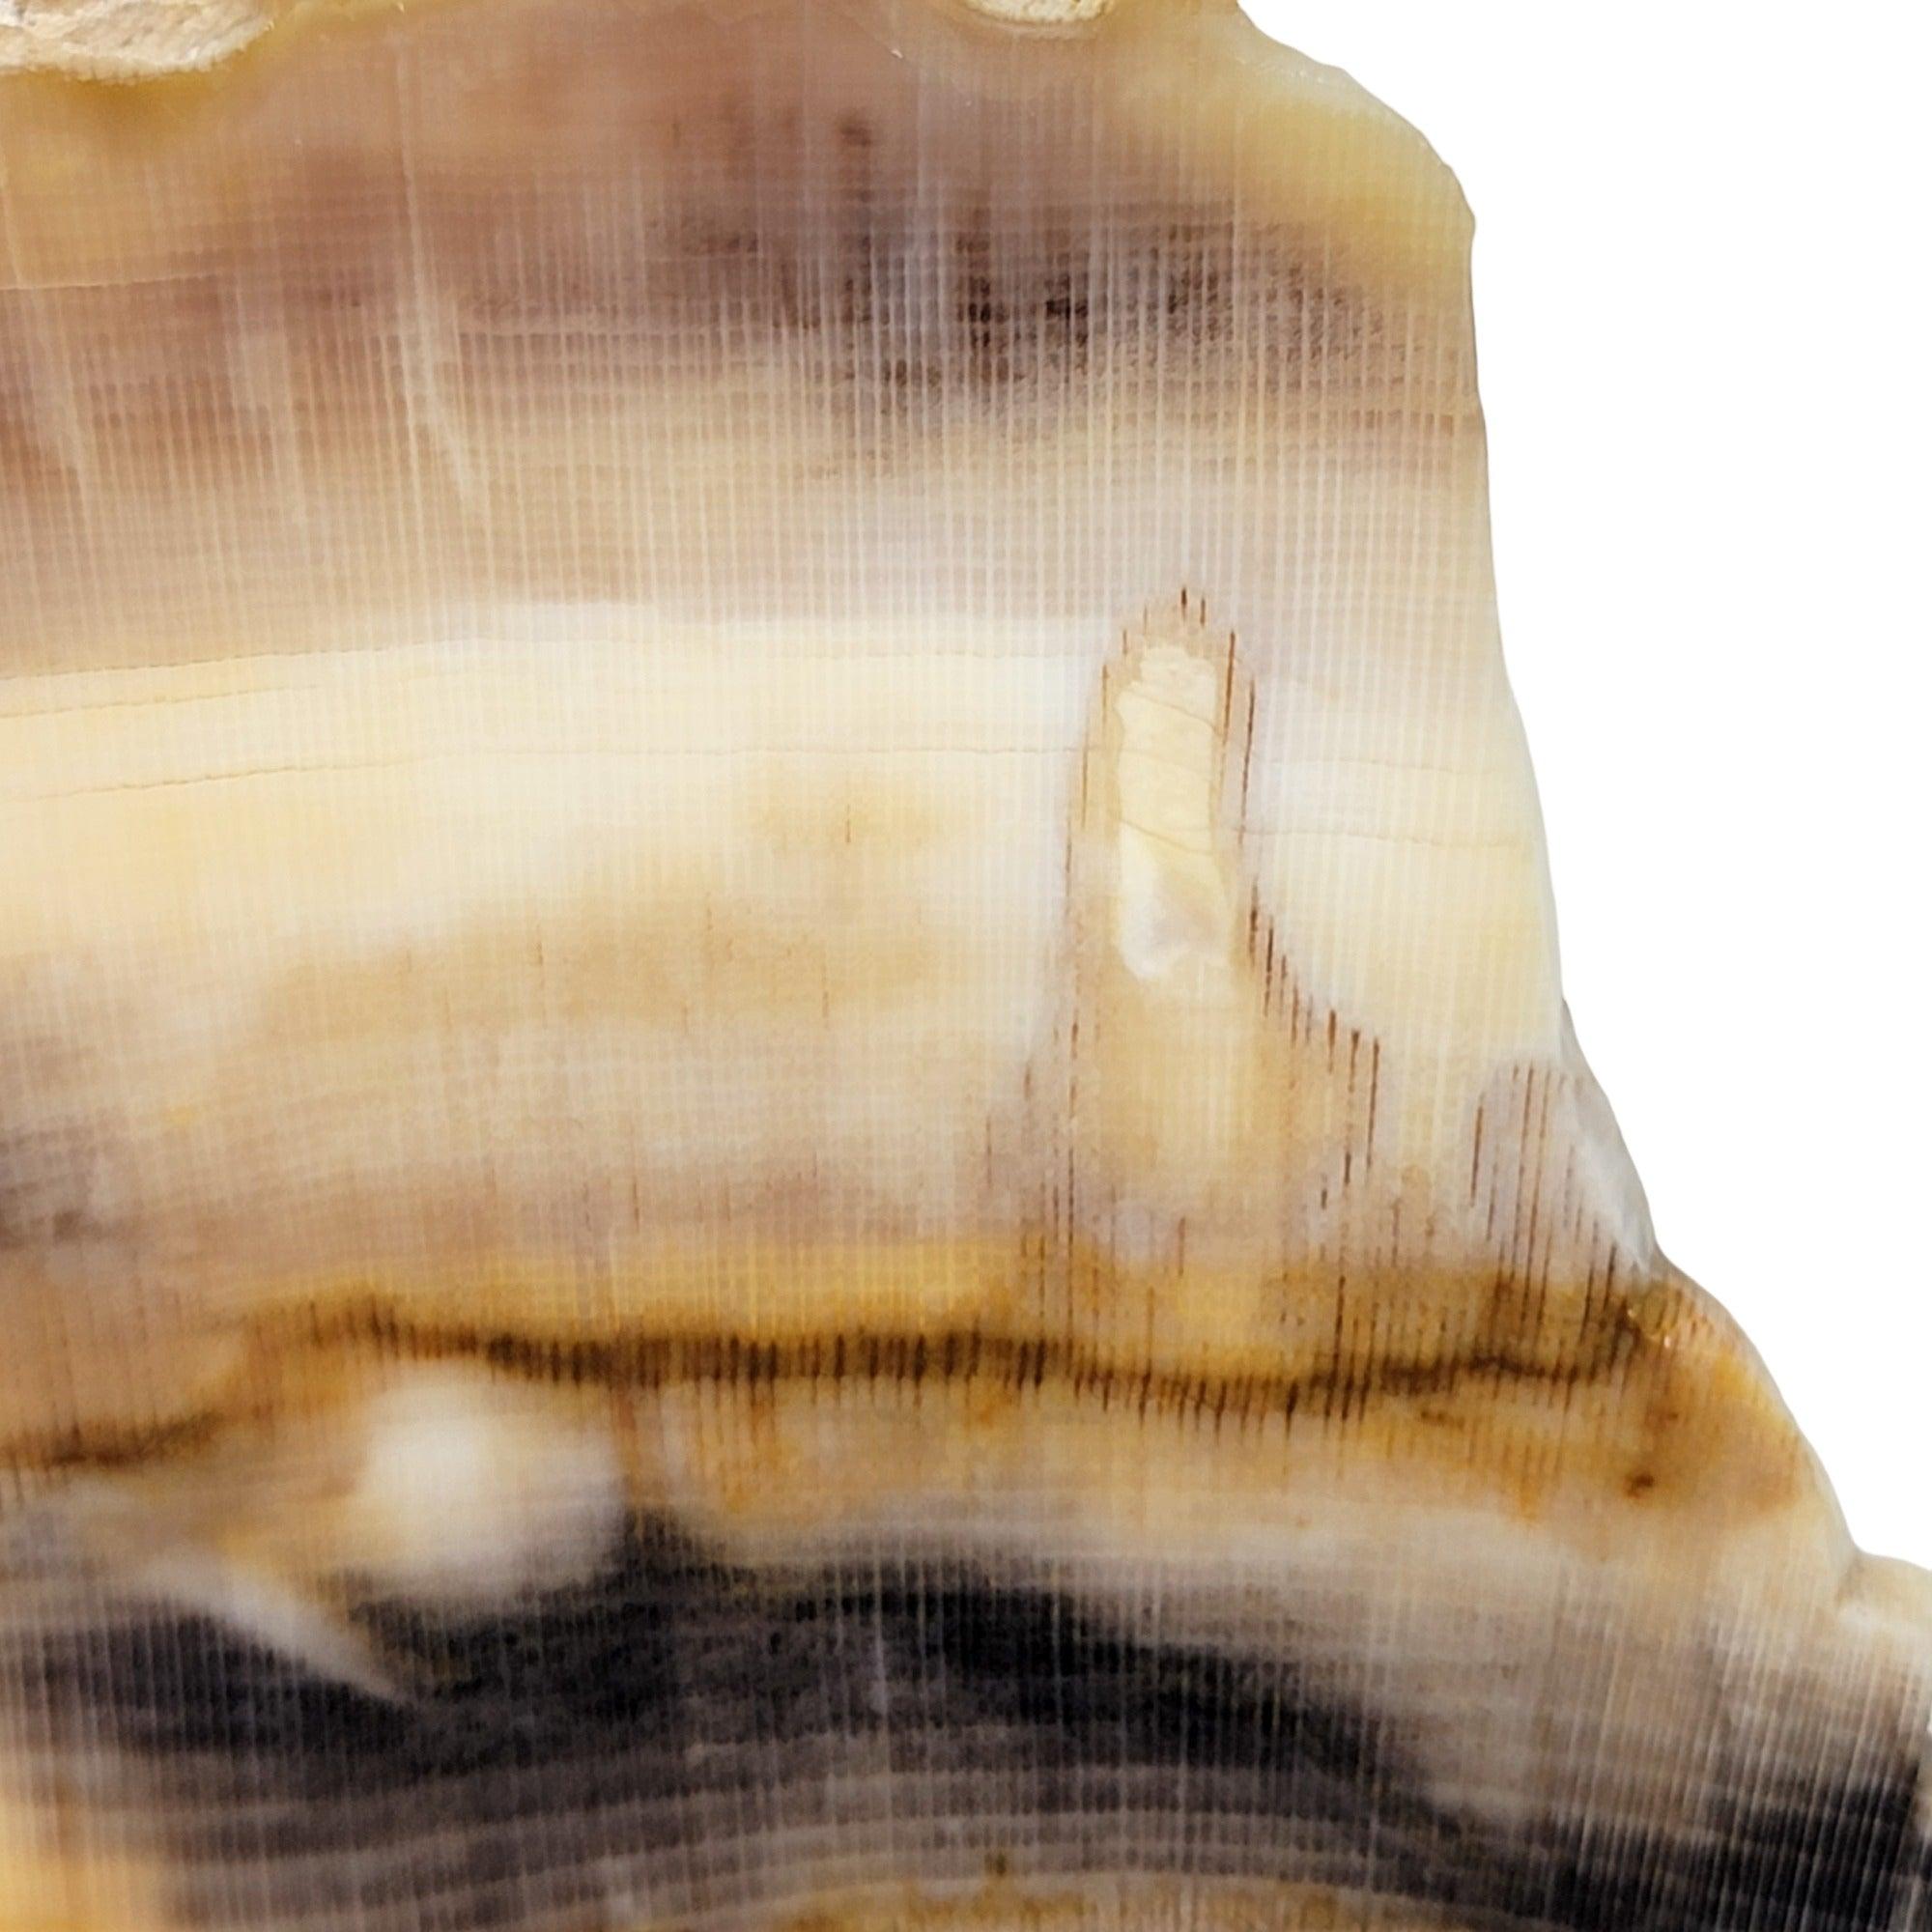 RARE Badger Pocket Petrified Wood Large Lapidary Slab! - Lapidary Central